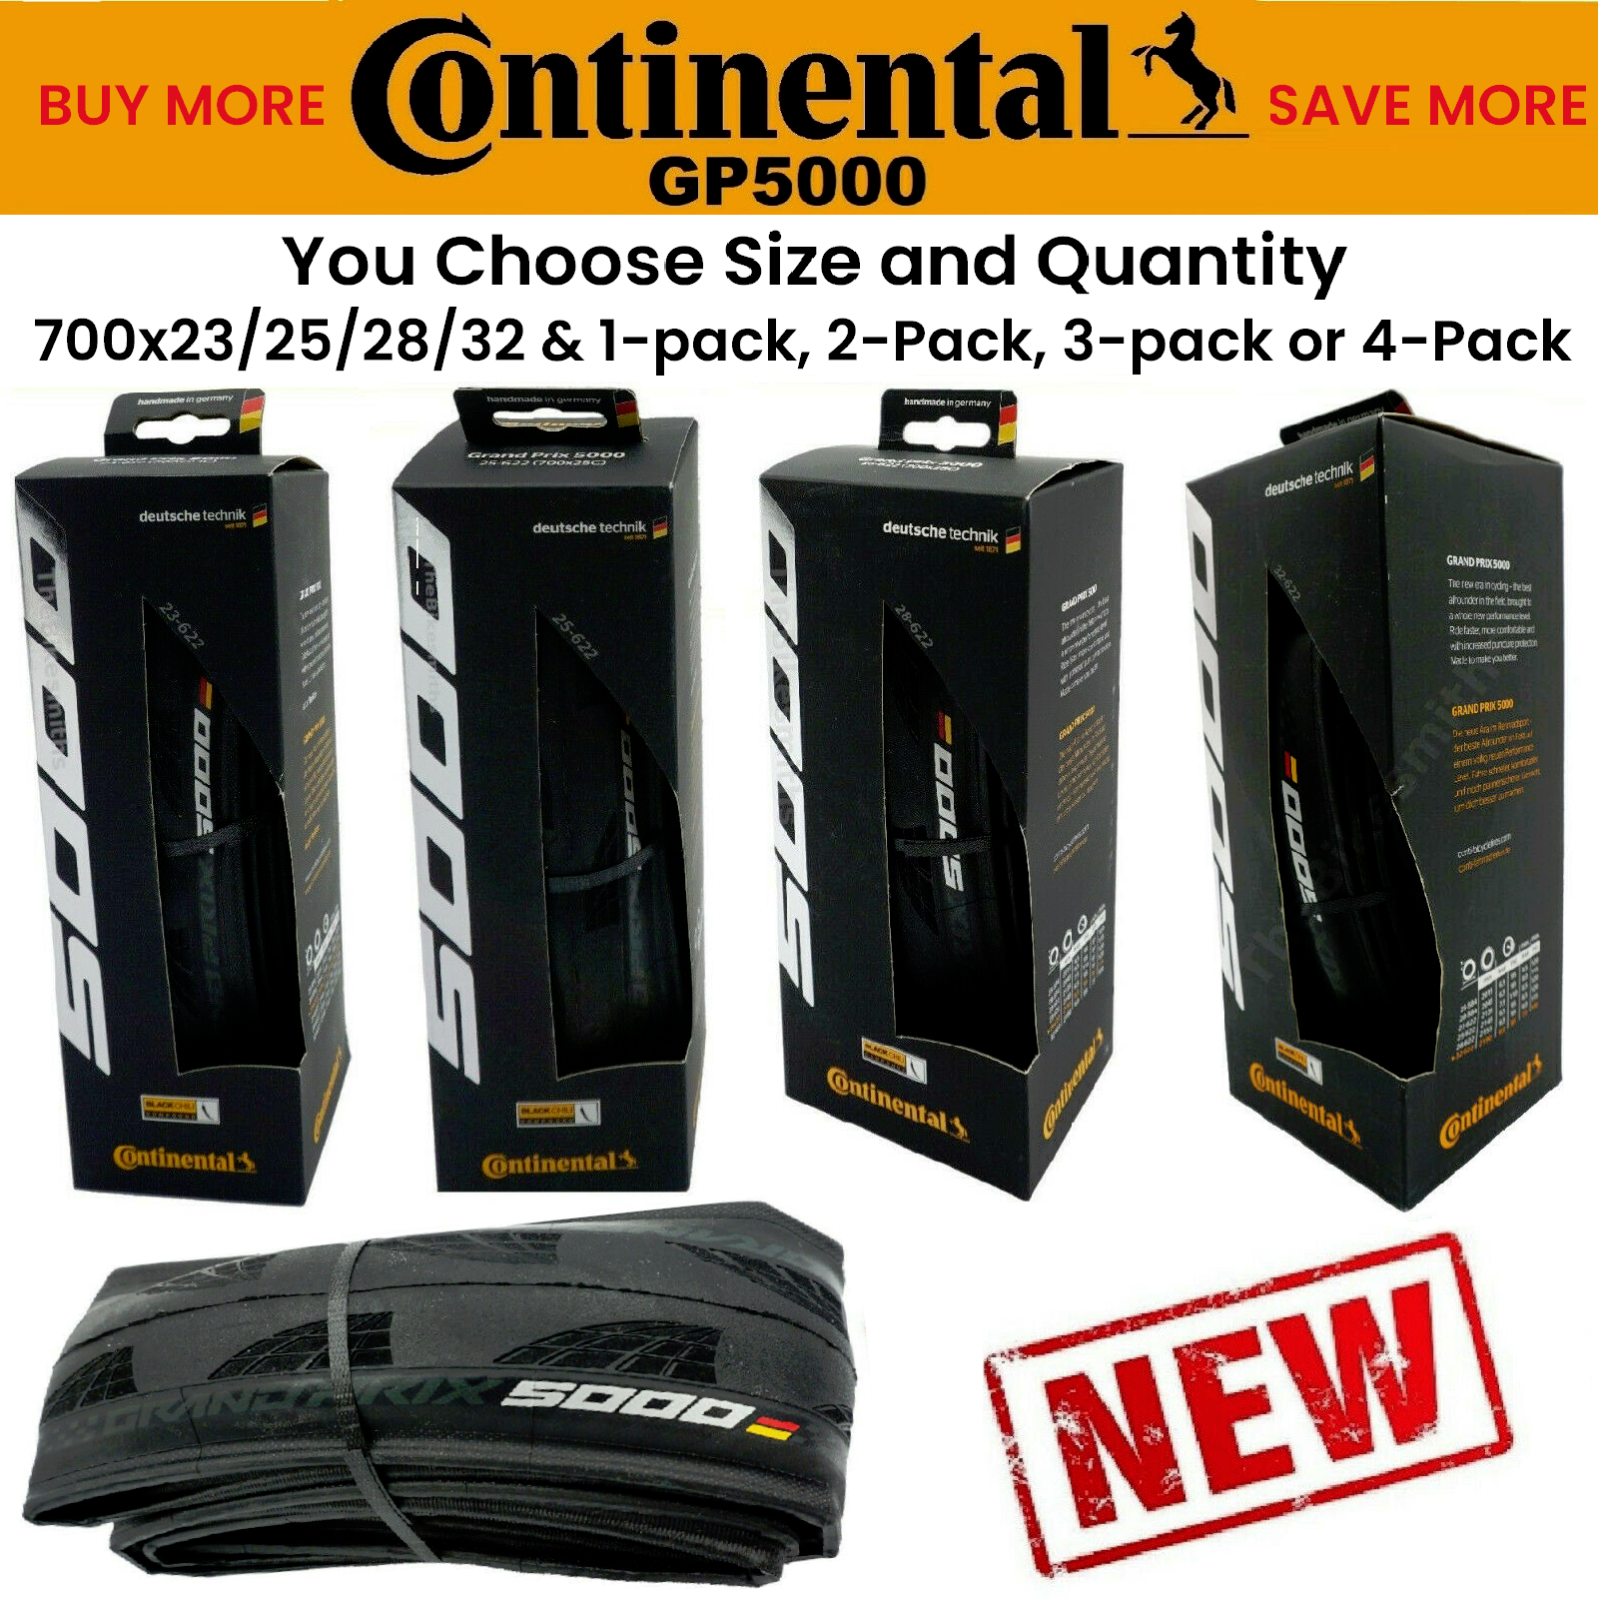 1 - 4 Pack Continental Grand Prix Gp 5000 700x 23 25 28 32 Fold Road Bike Tires